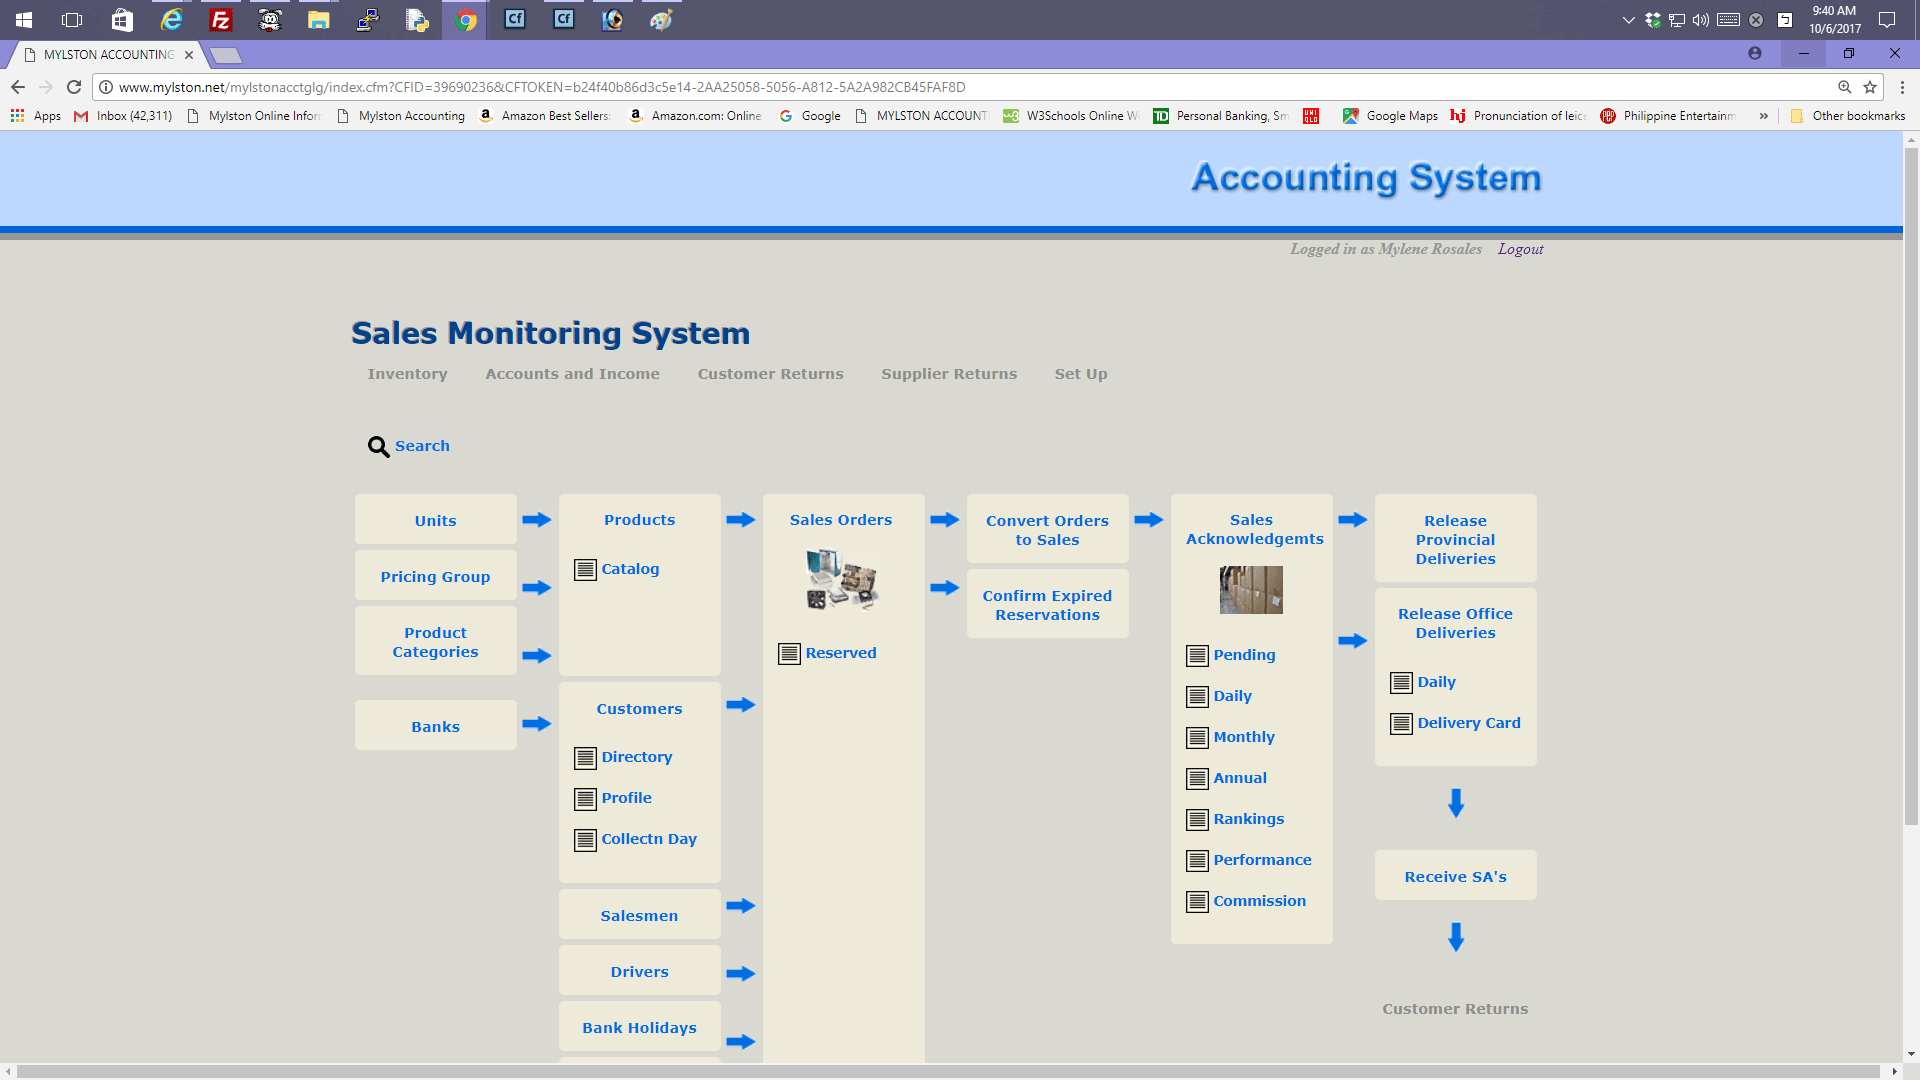 LG Accounting System Menu